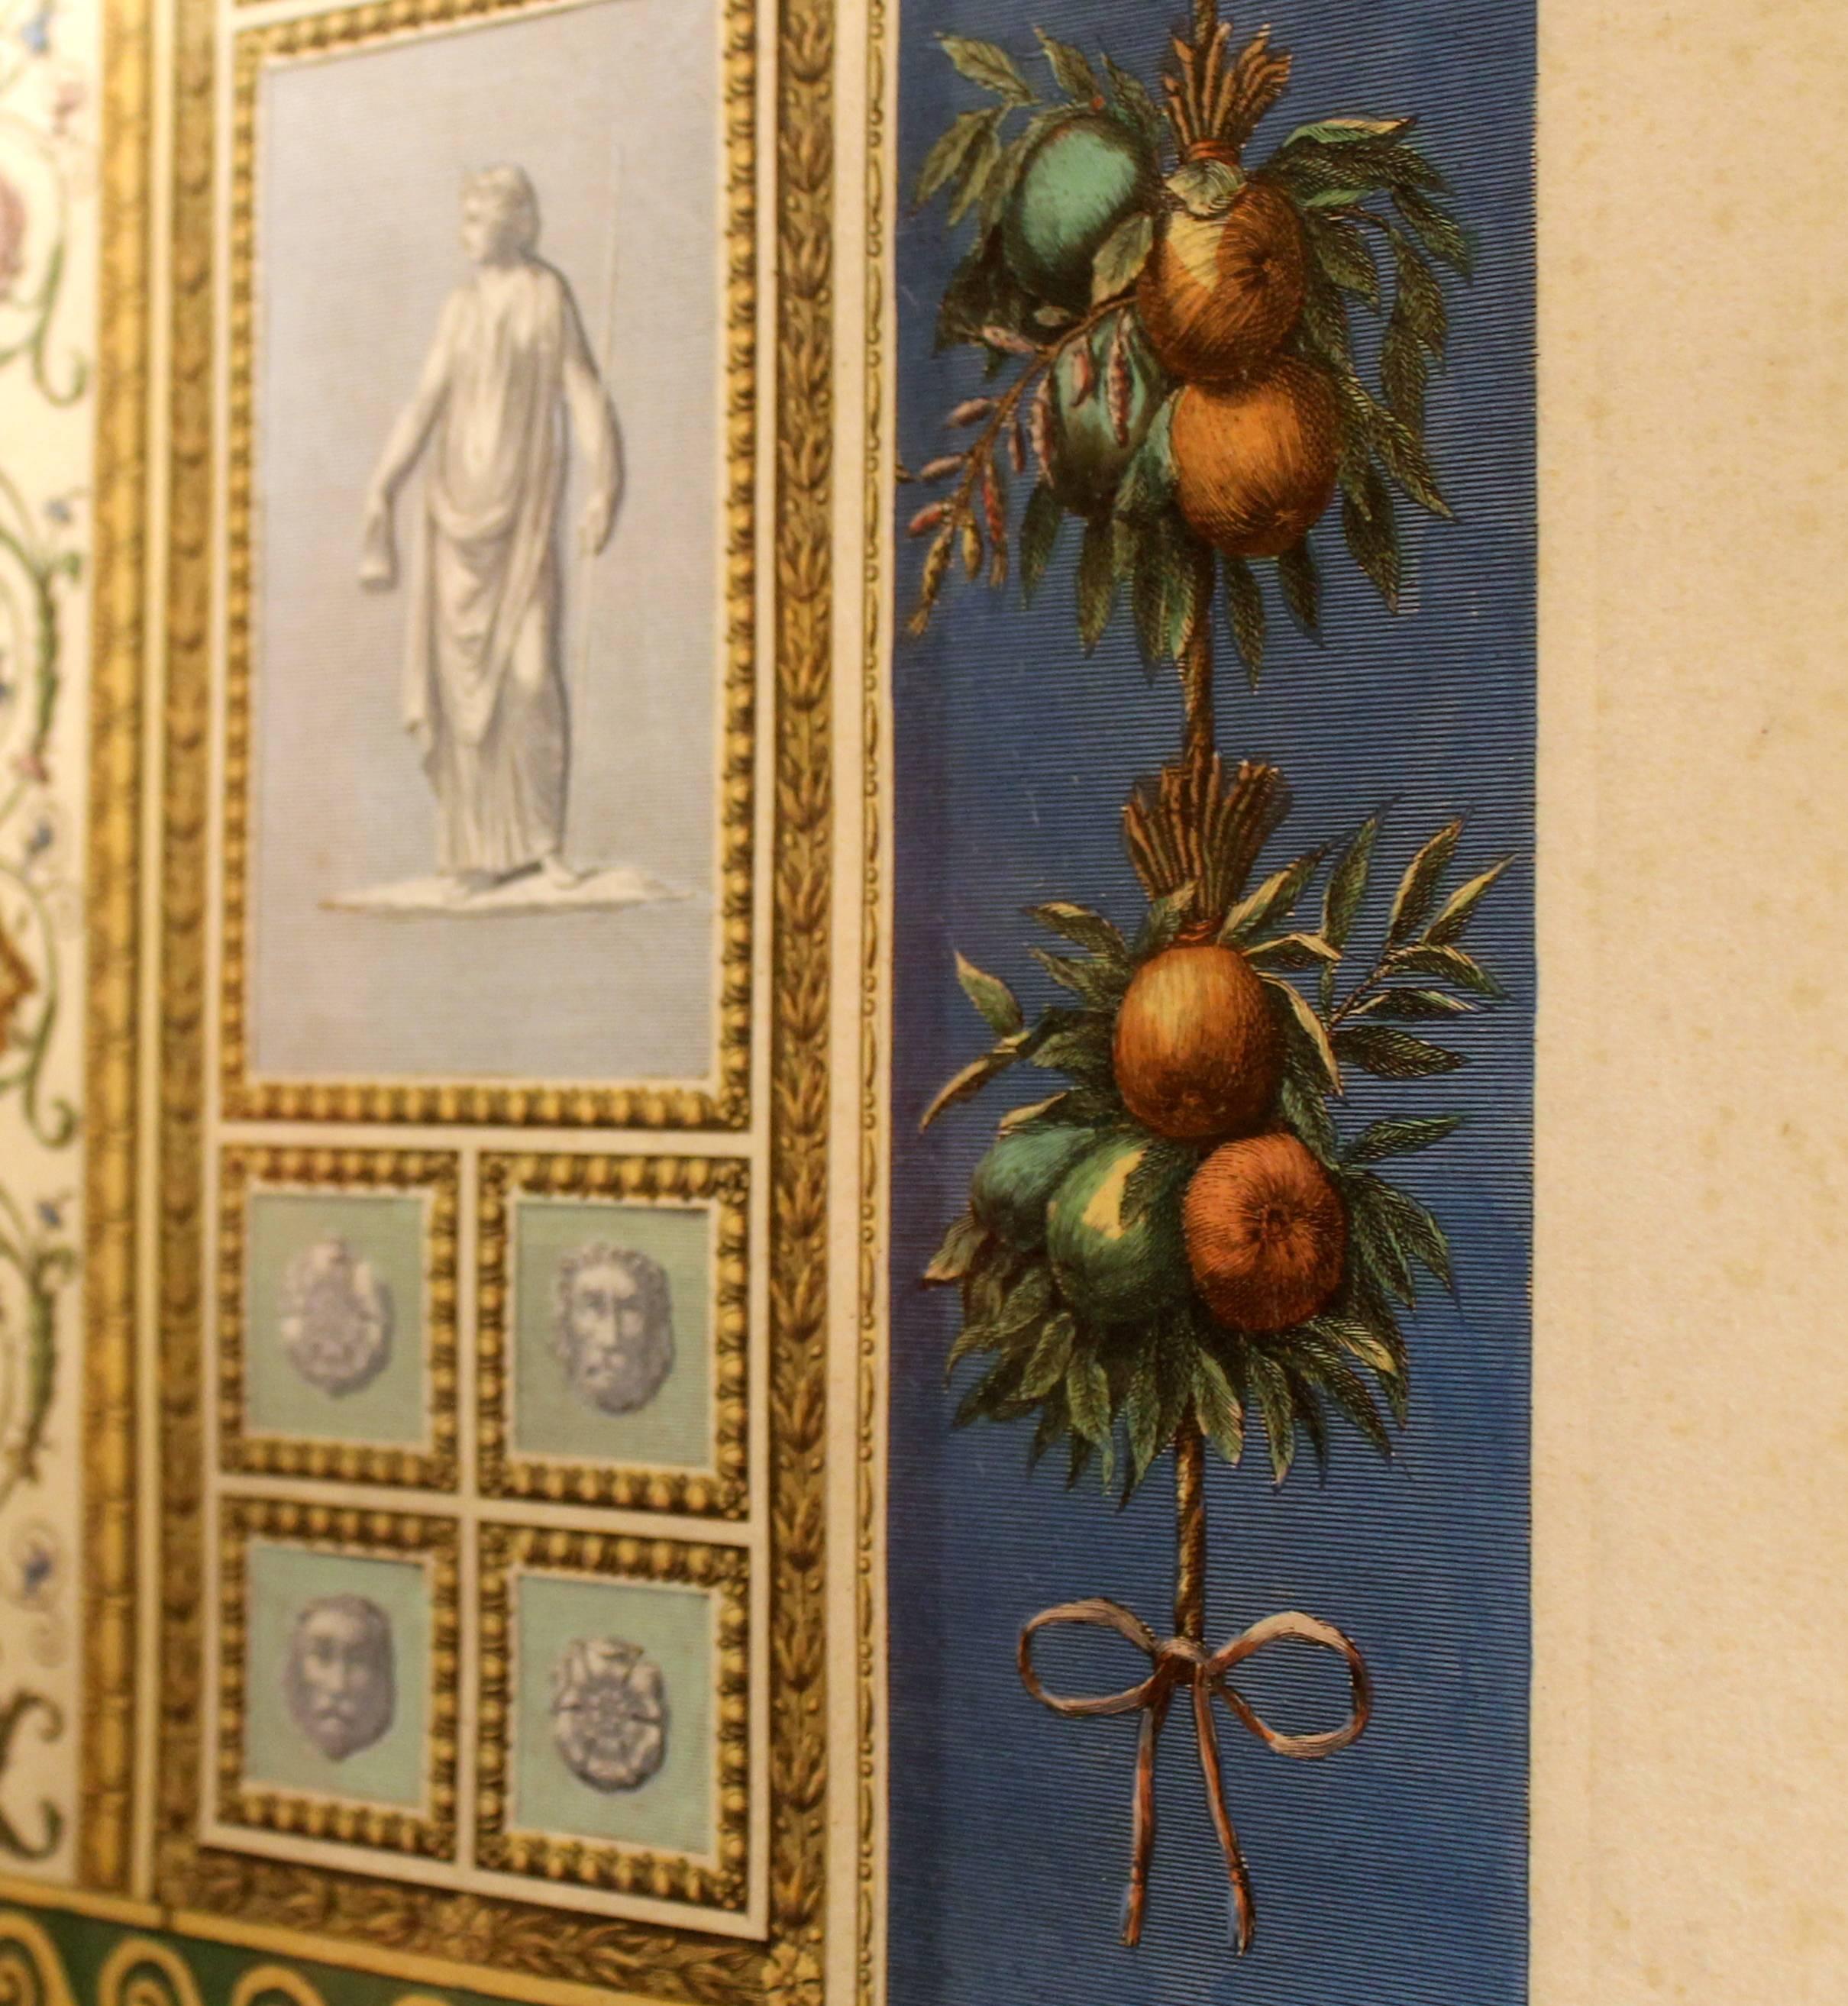 Wood Three Italian 18th Century Hand-Colored Engravings on Paper of Vatican Loggias